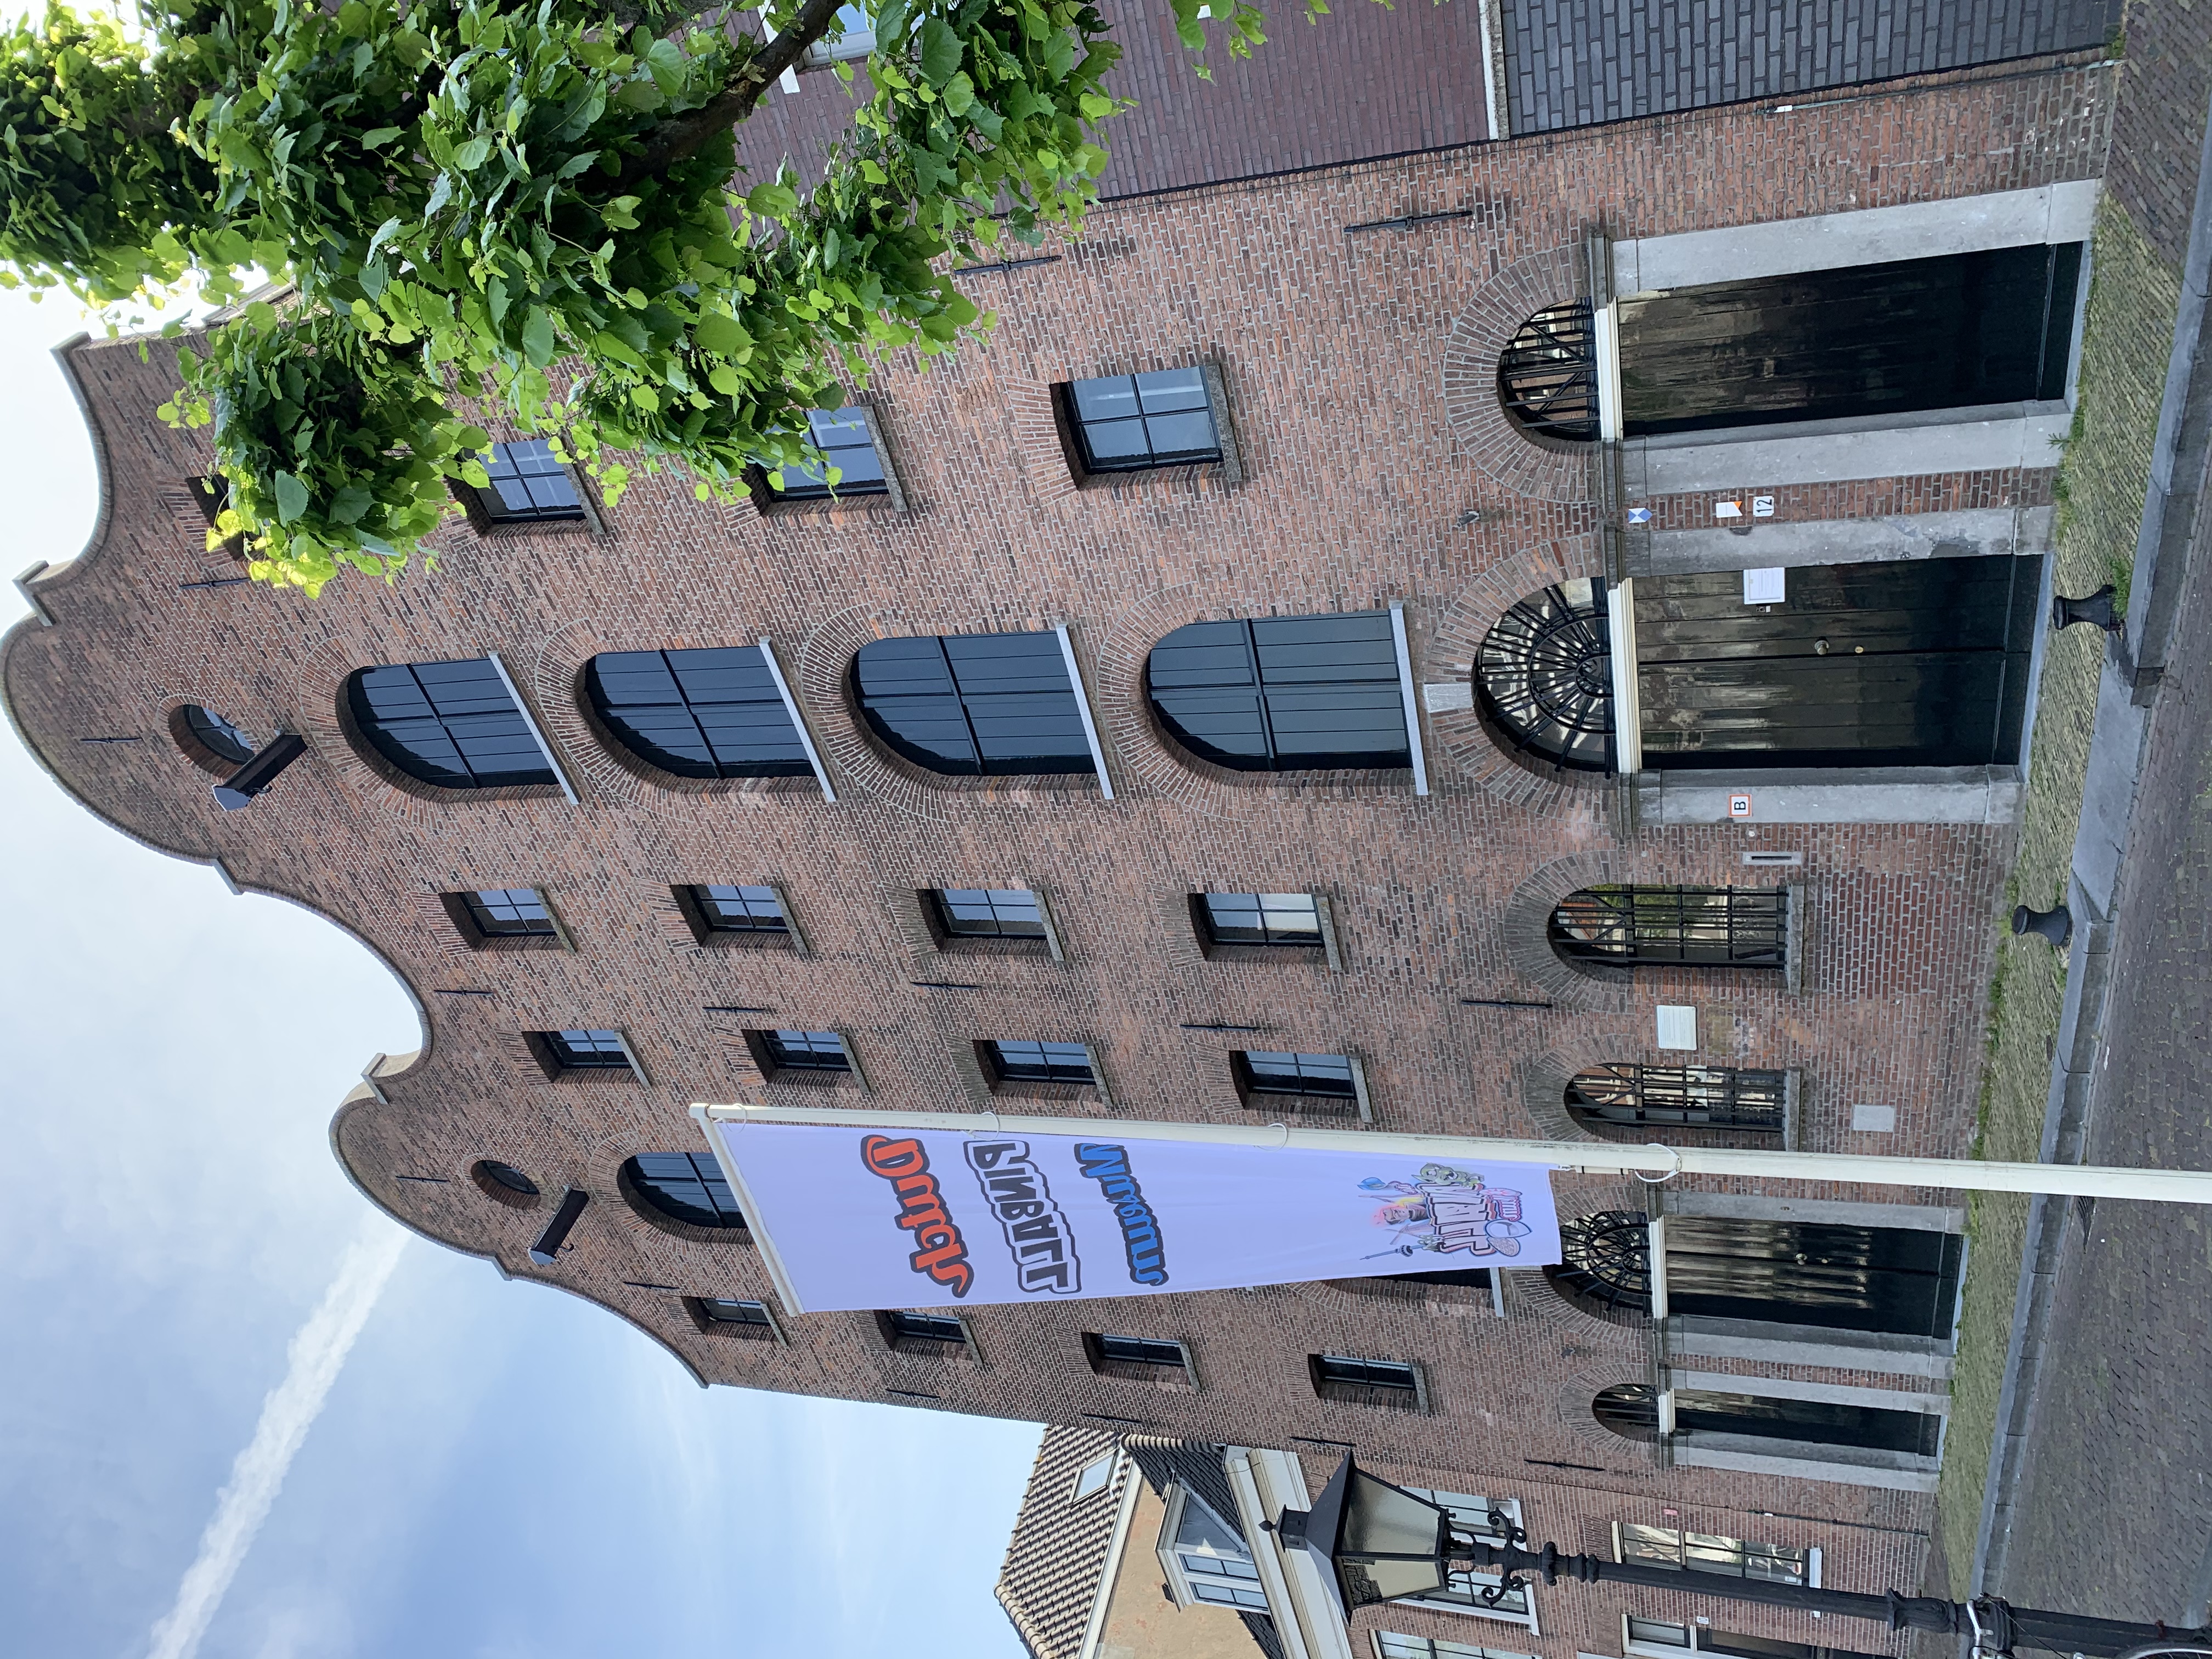 Visit Dutch Pinball Museum in Rotterdam